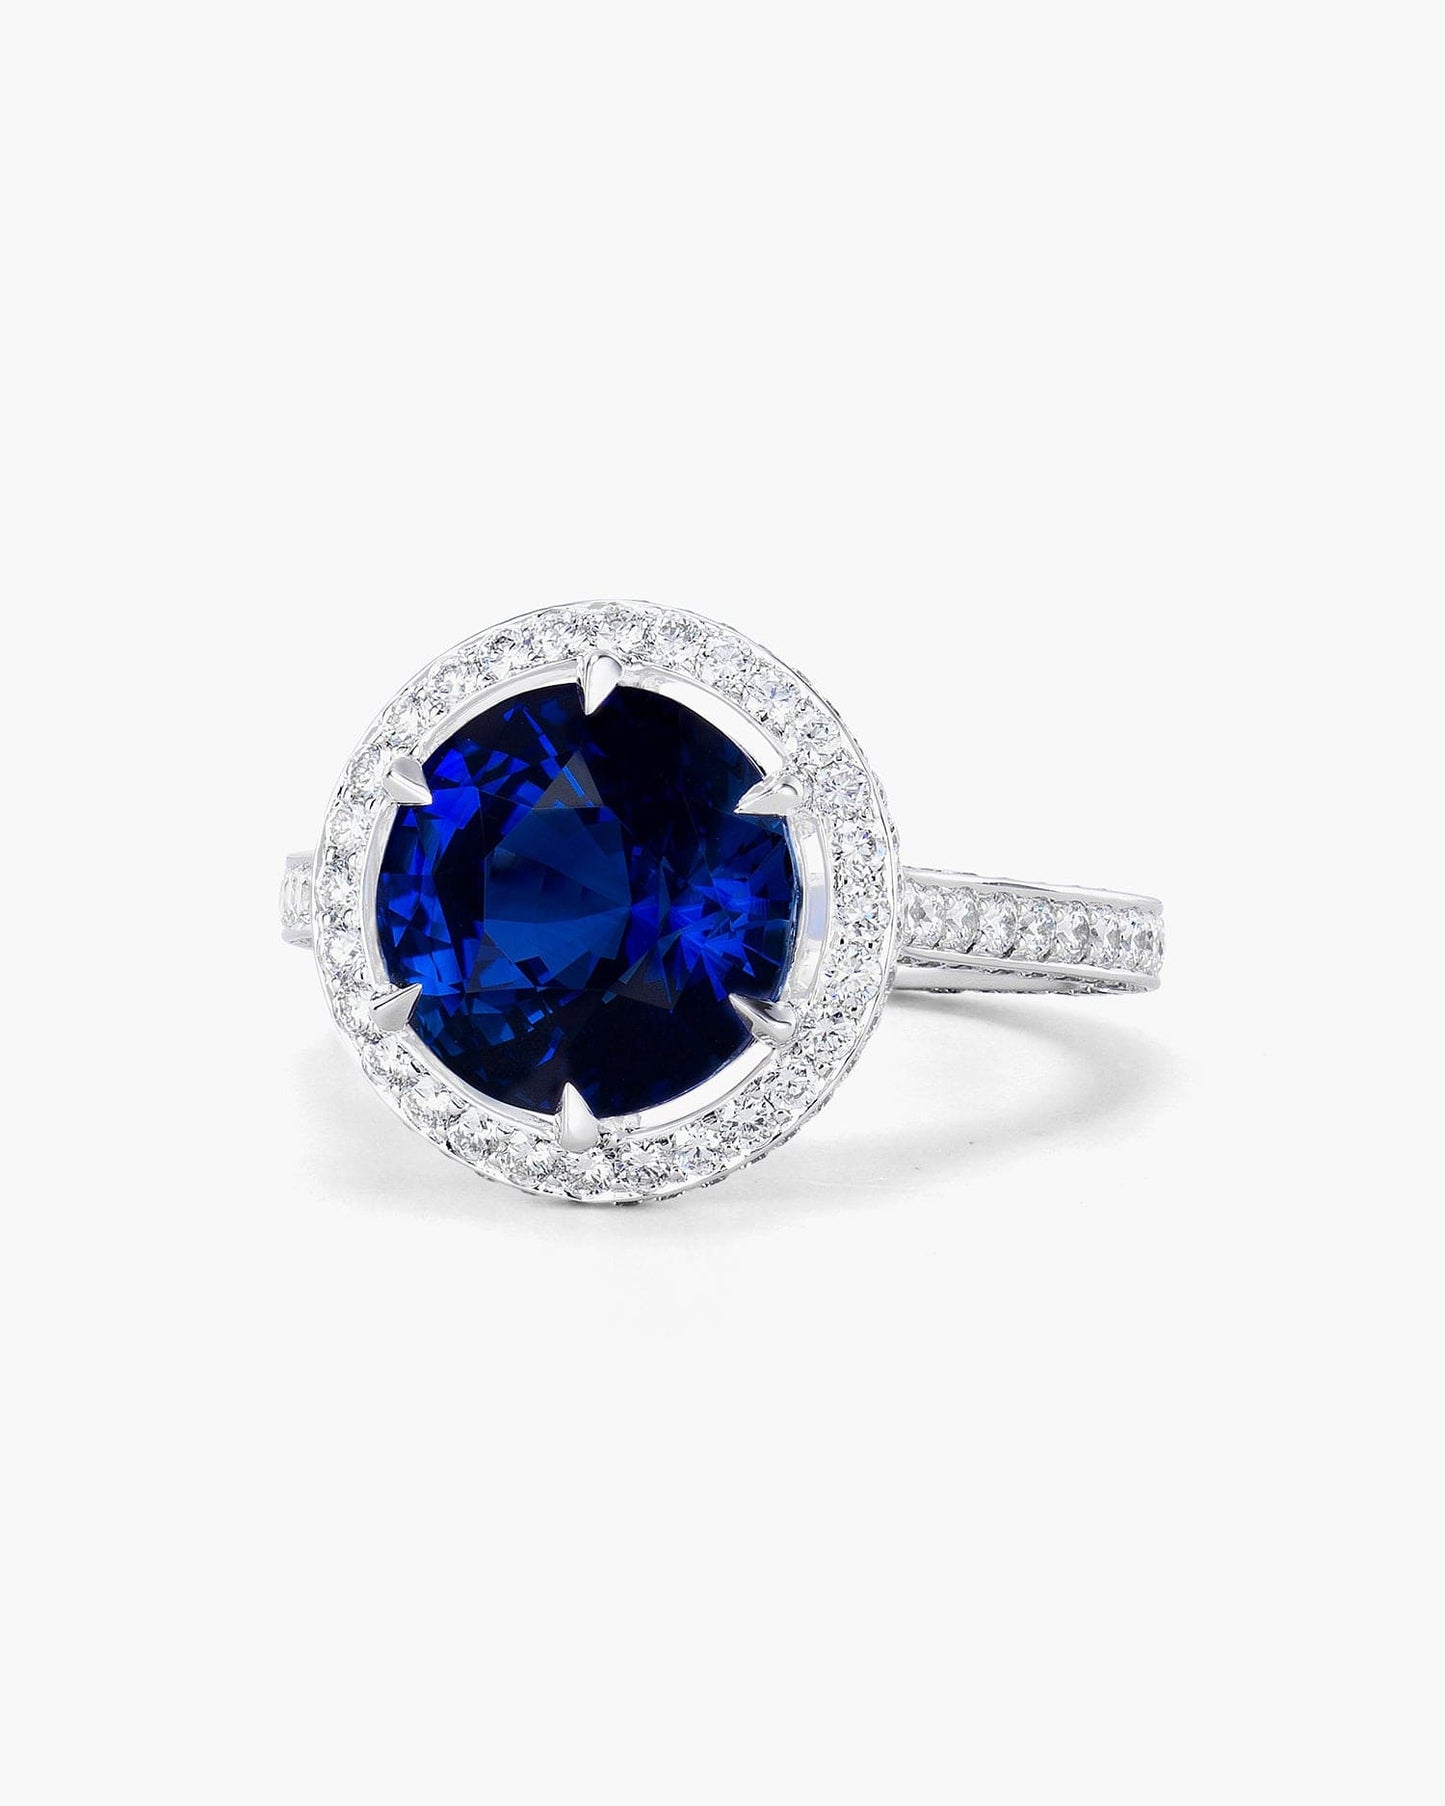 5.06 carat Round Cut Madagascar Sapphire and Diamond Ring